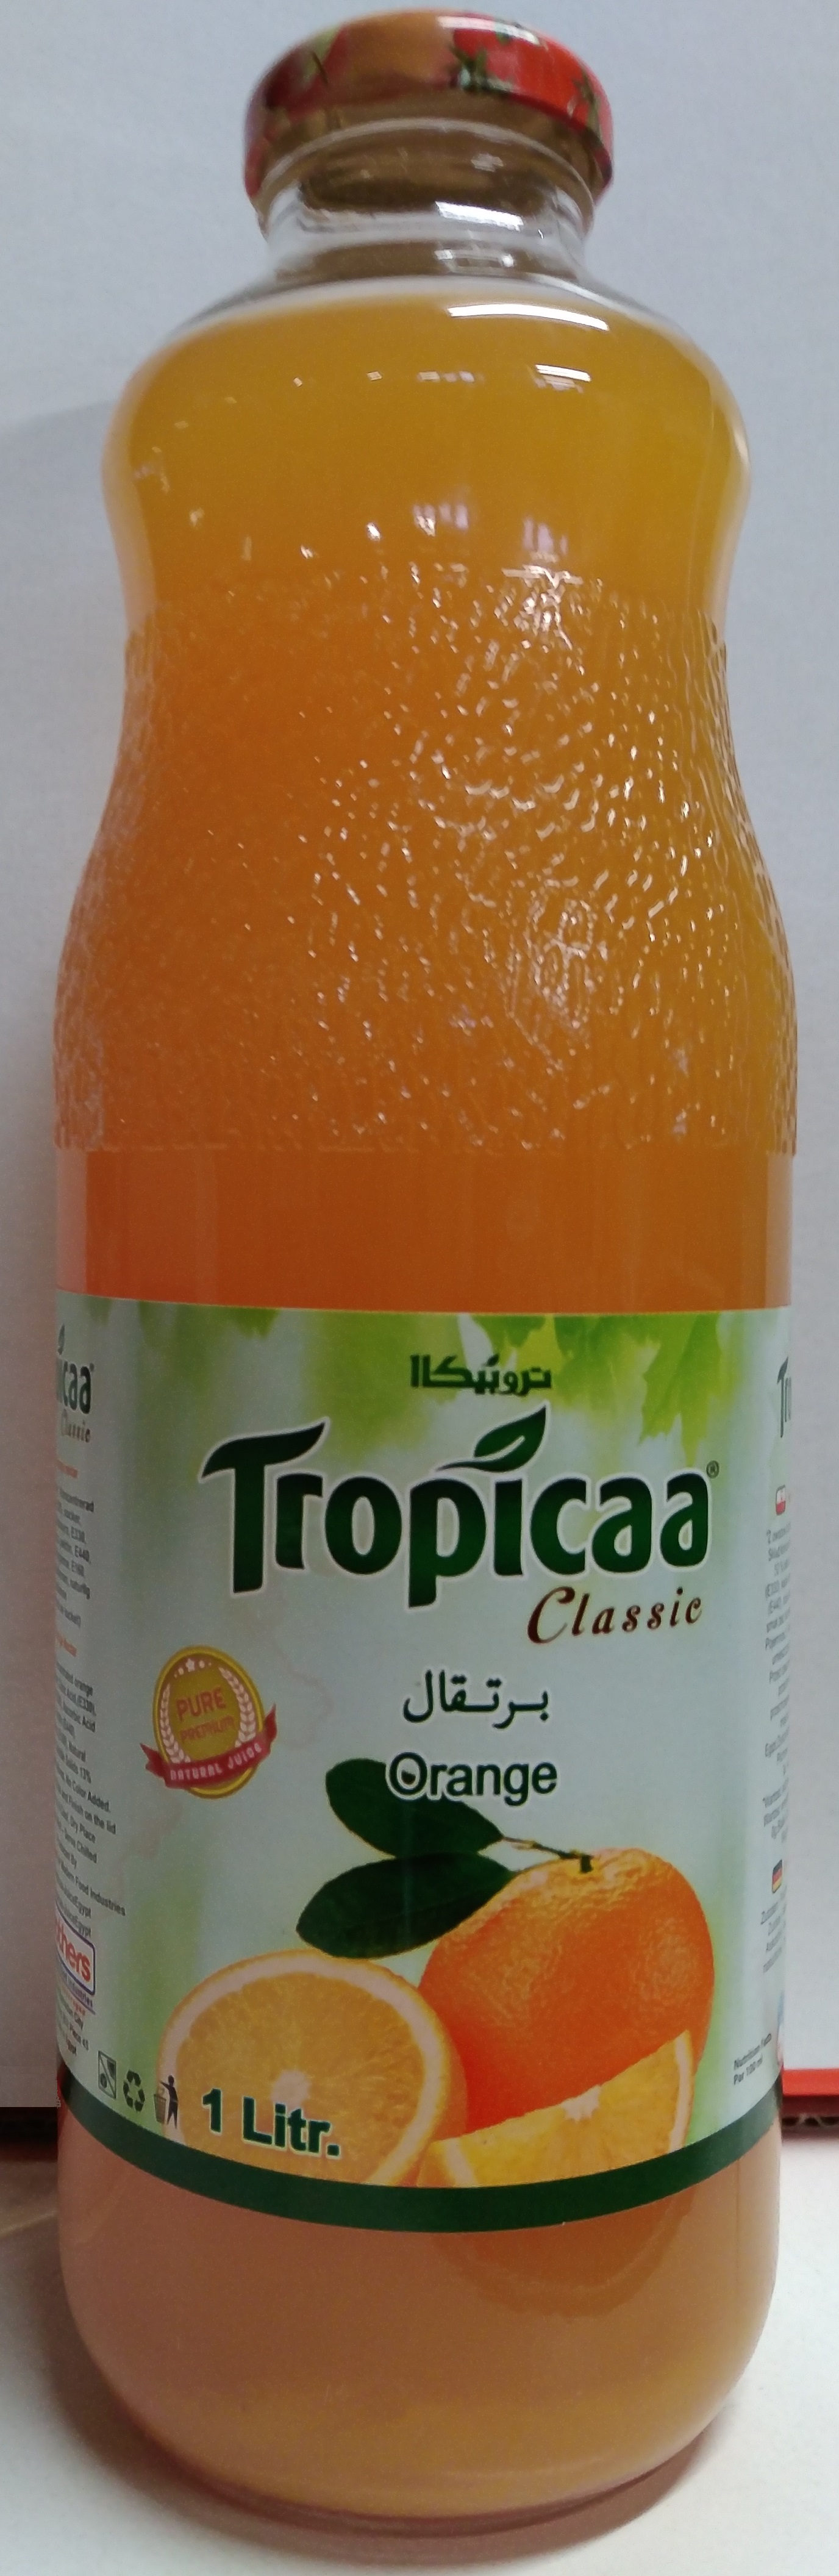 Tropicaa Классический Оранжевый Нектар